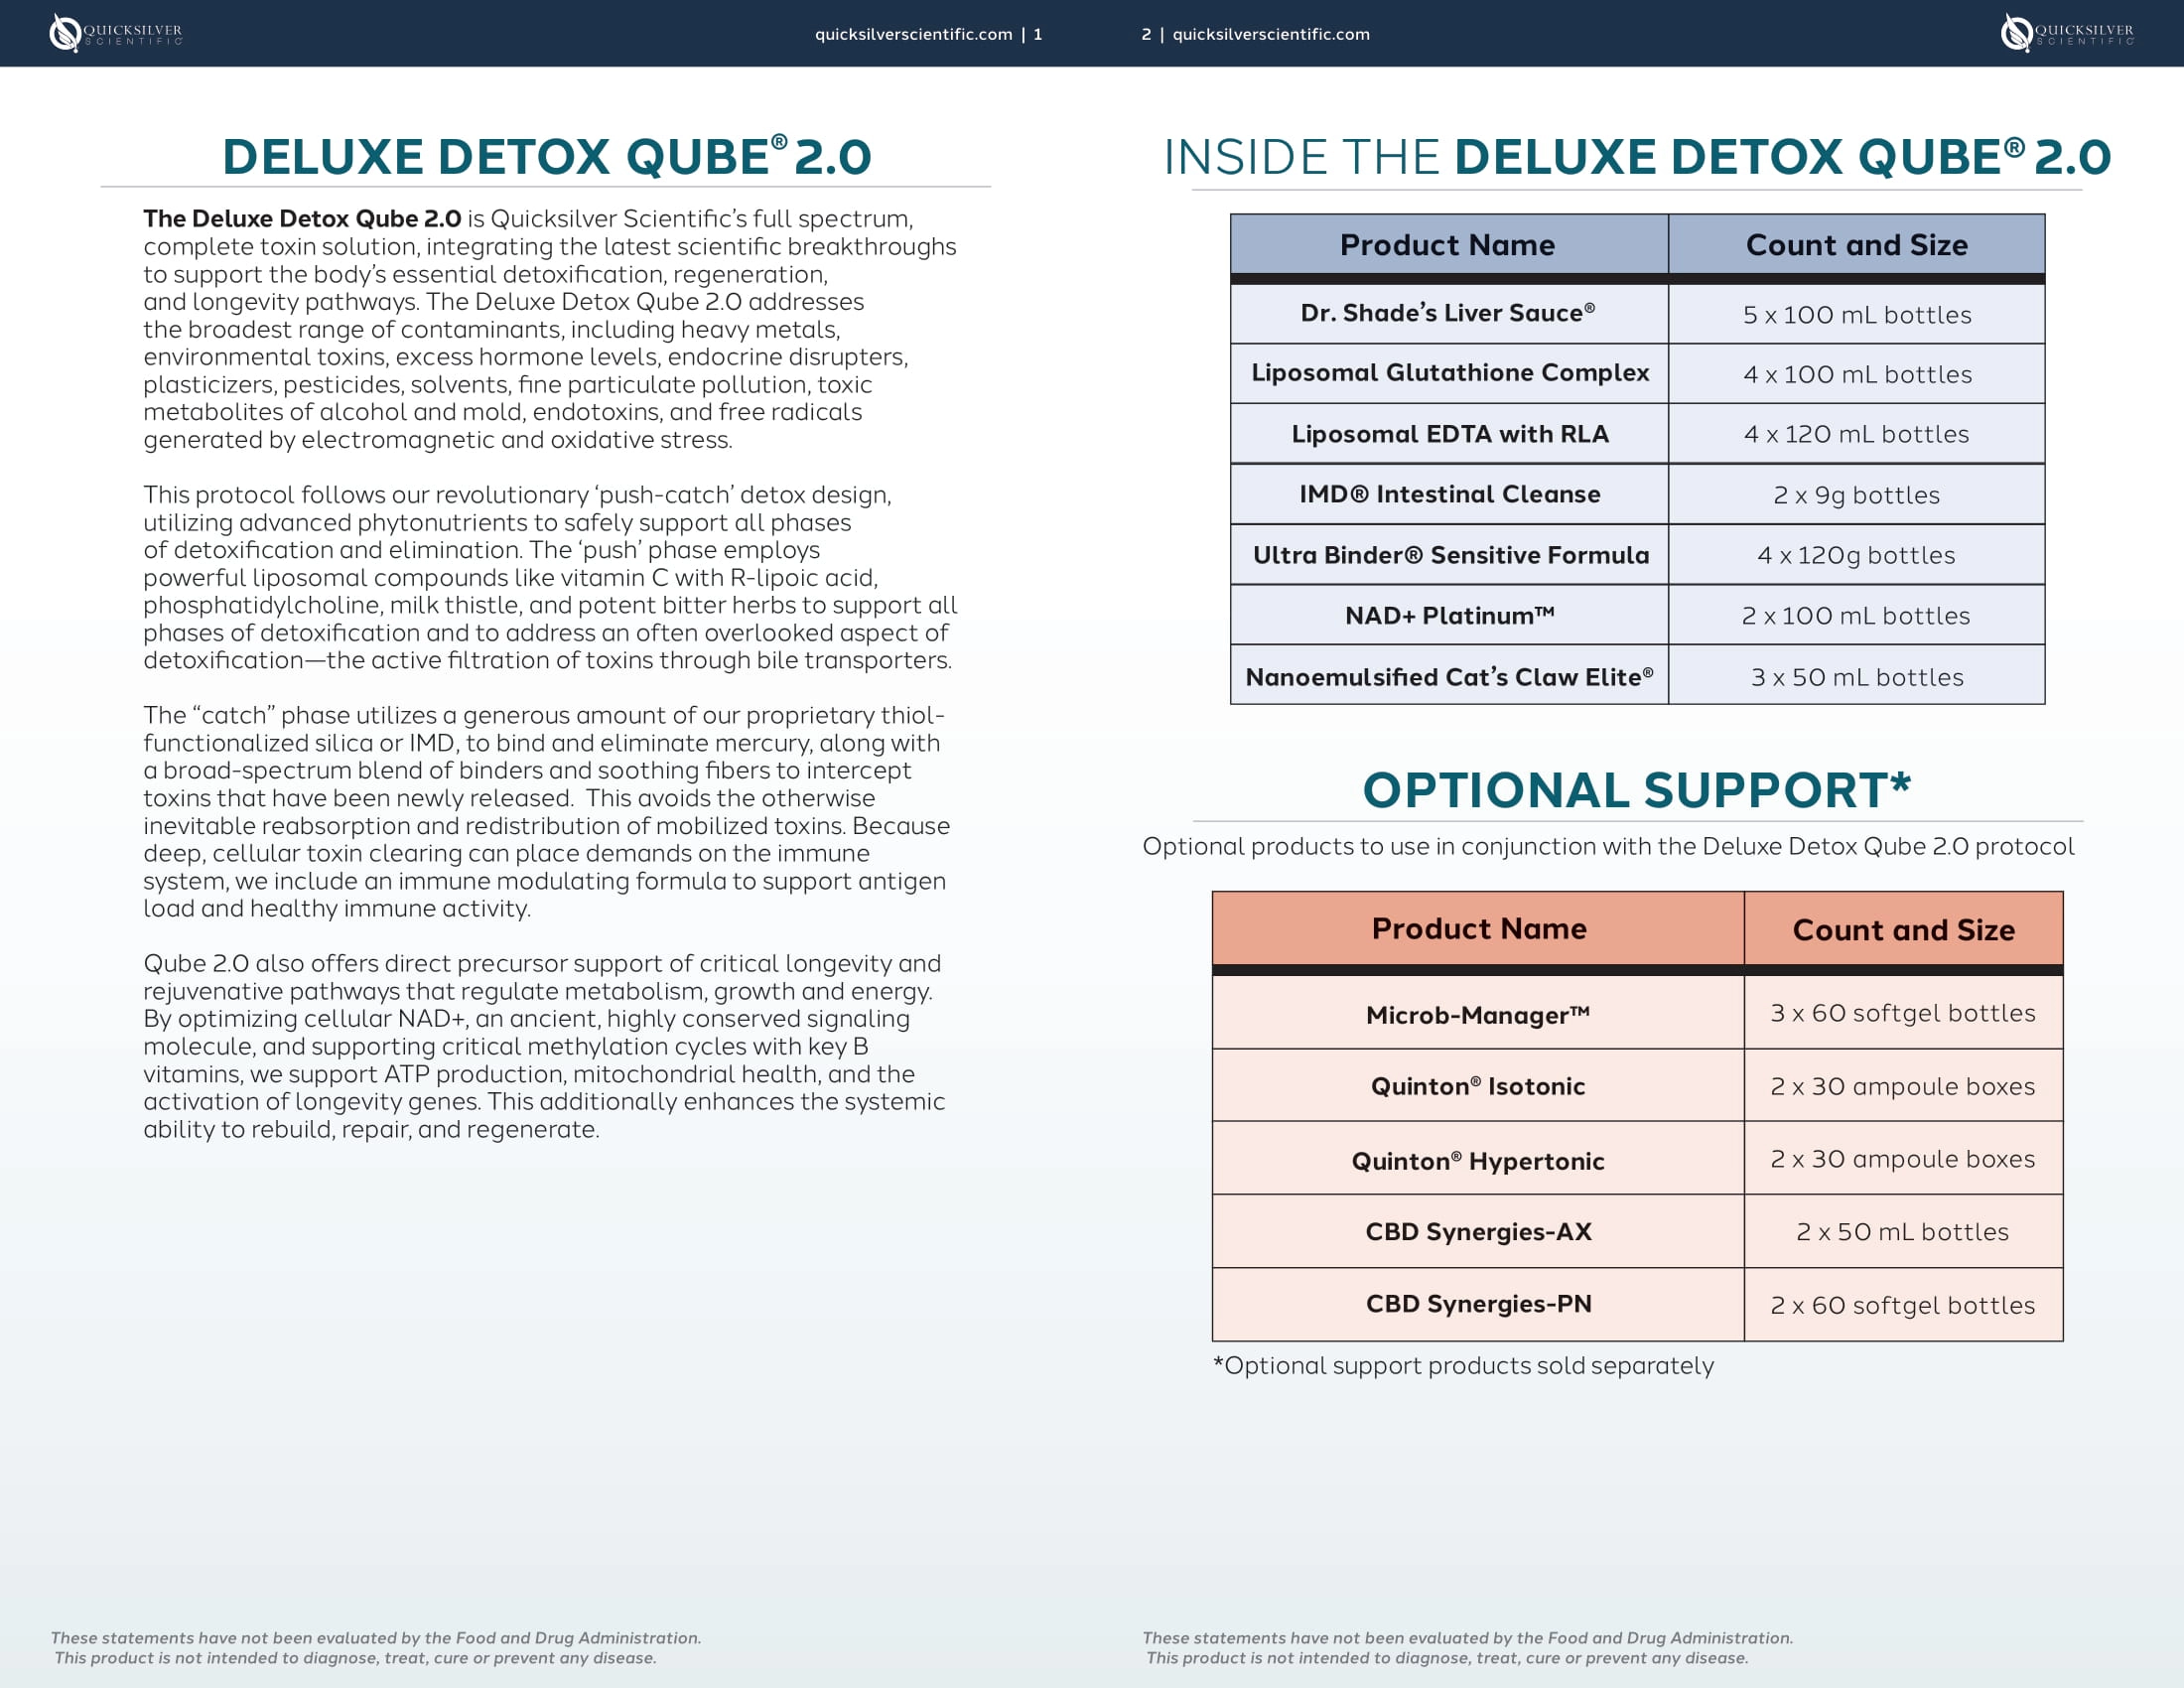 Deluxe Detox Qube 2.0 Instructions